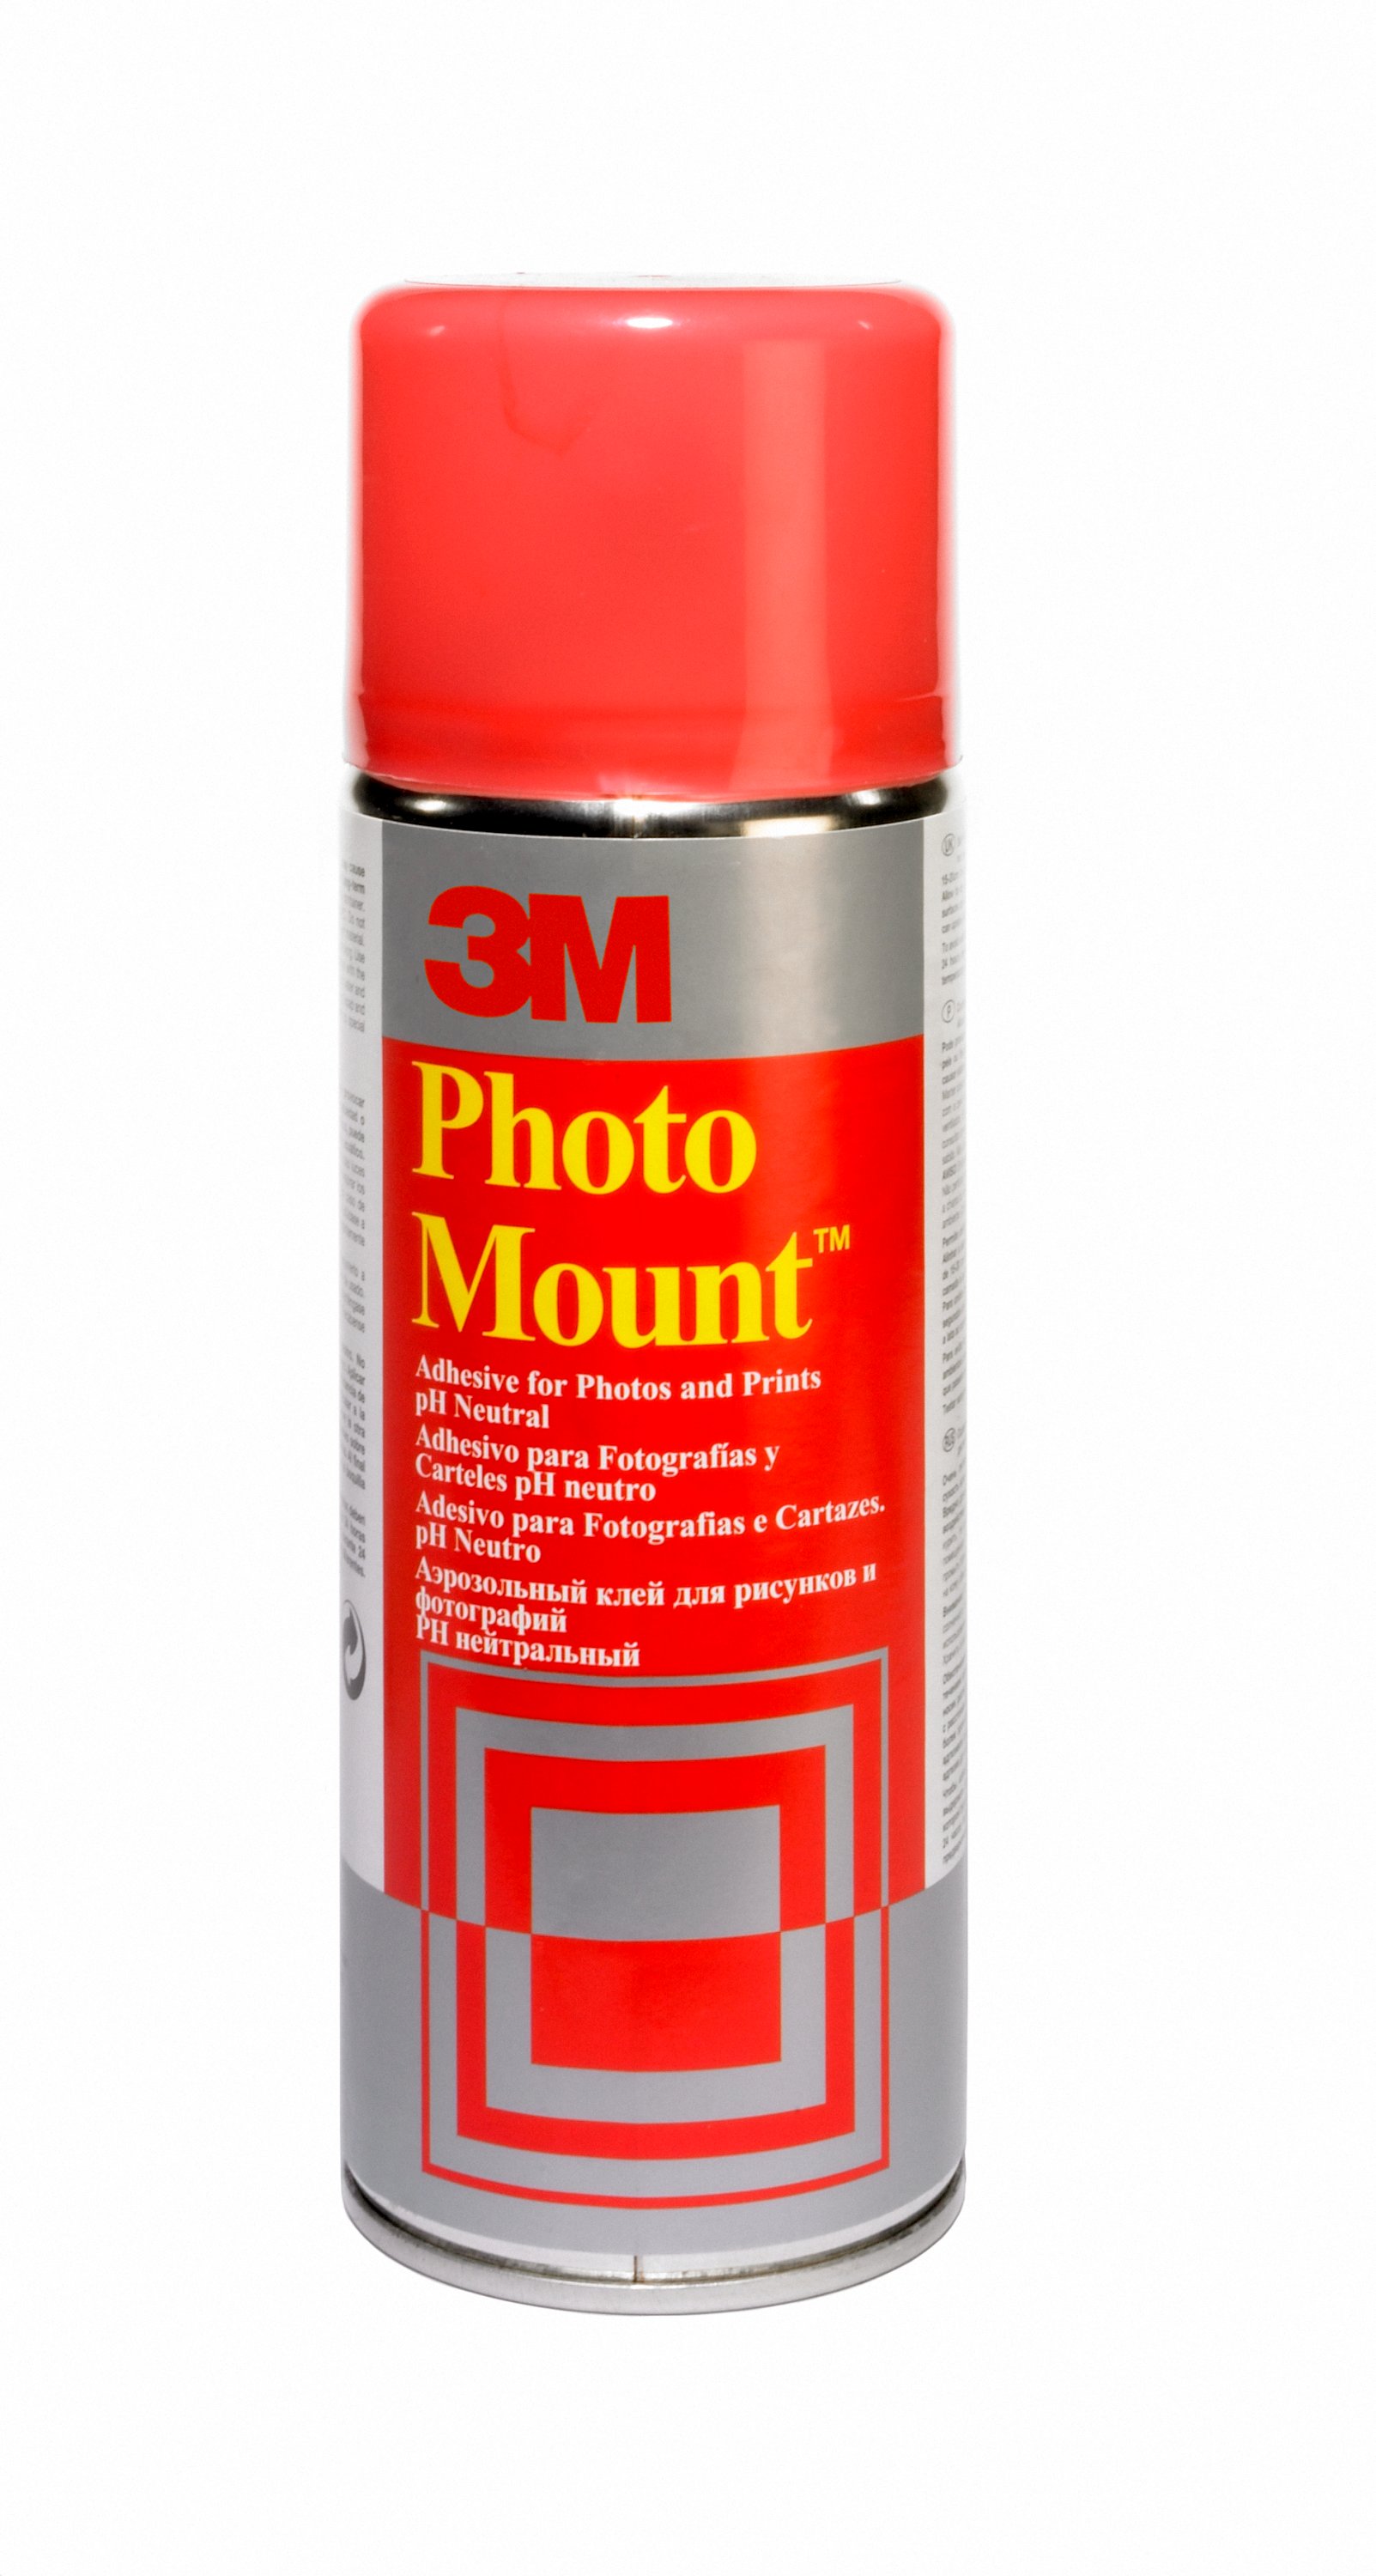 3M PhotoMount PM/400